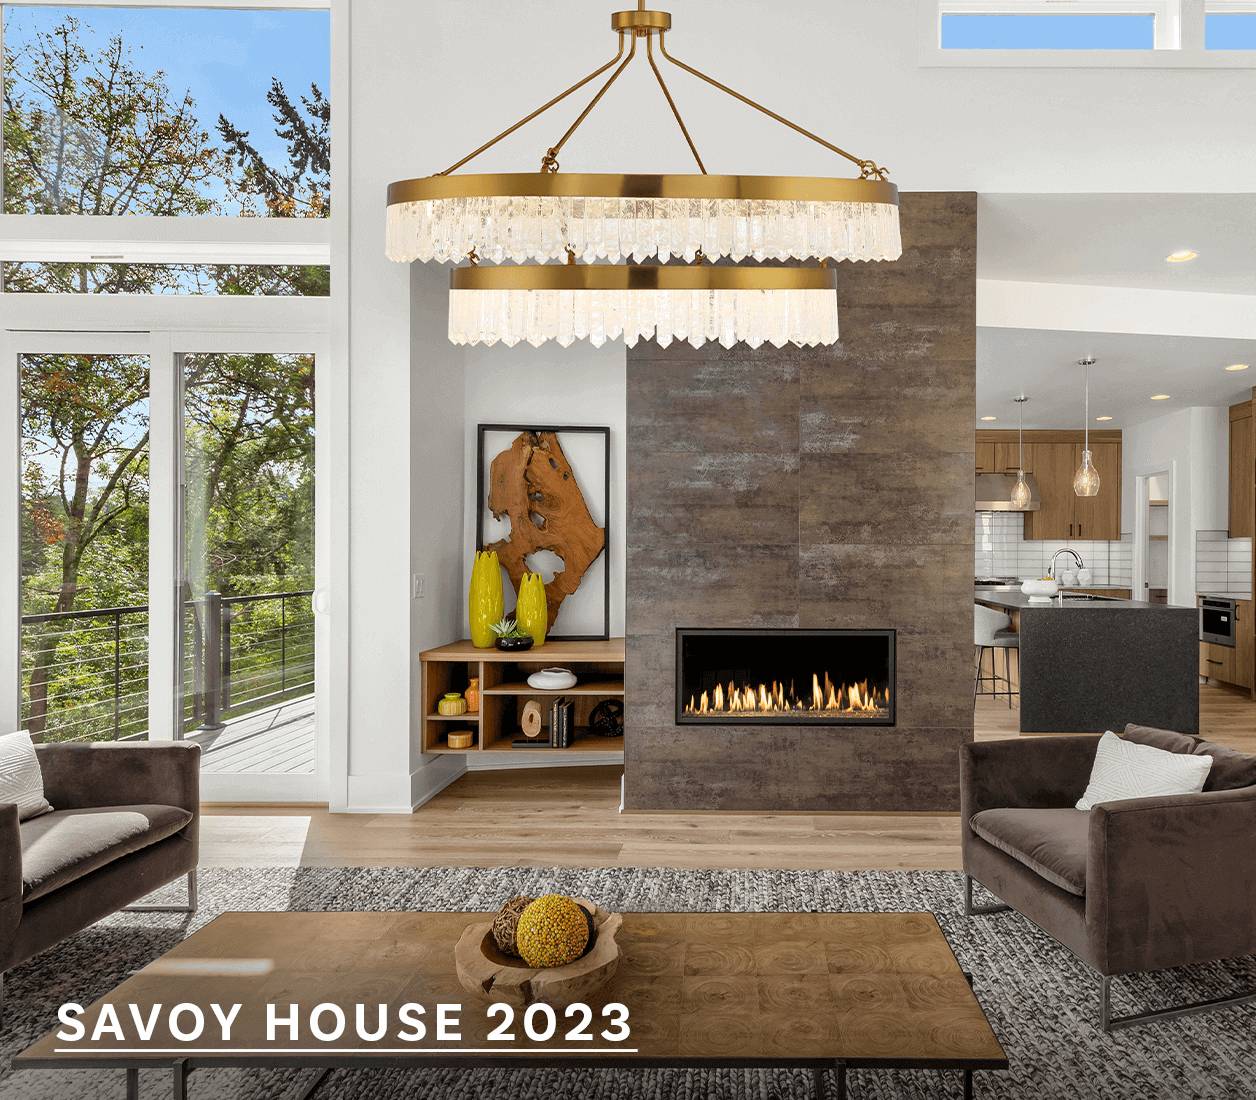 Savoy House 2023